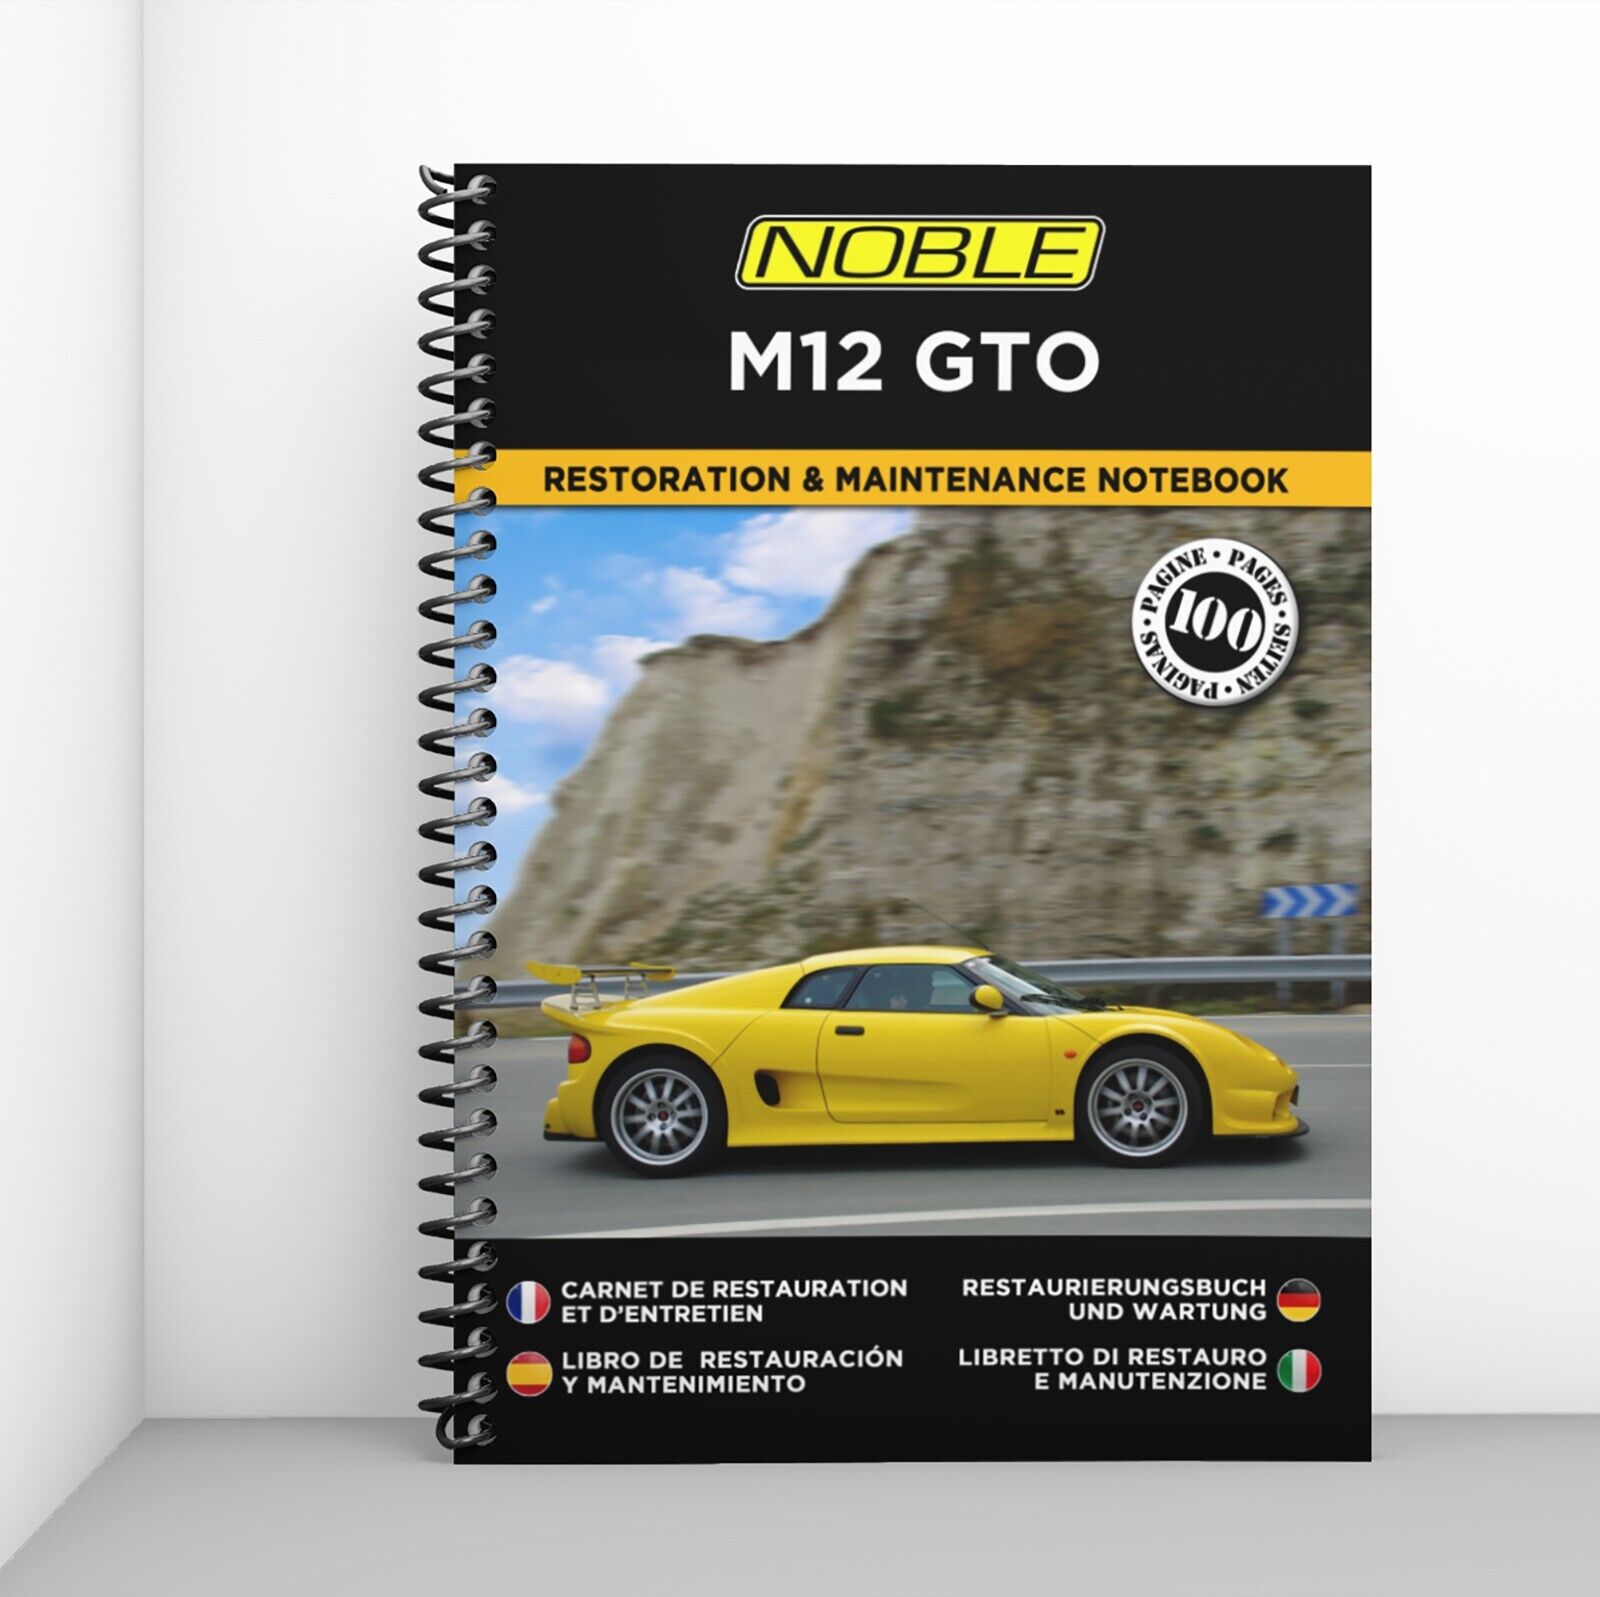 NOBLE M12 GTO - Restoration & Maintenance Notebook - 